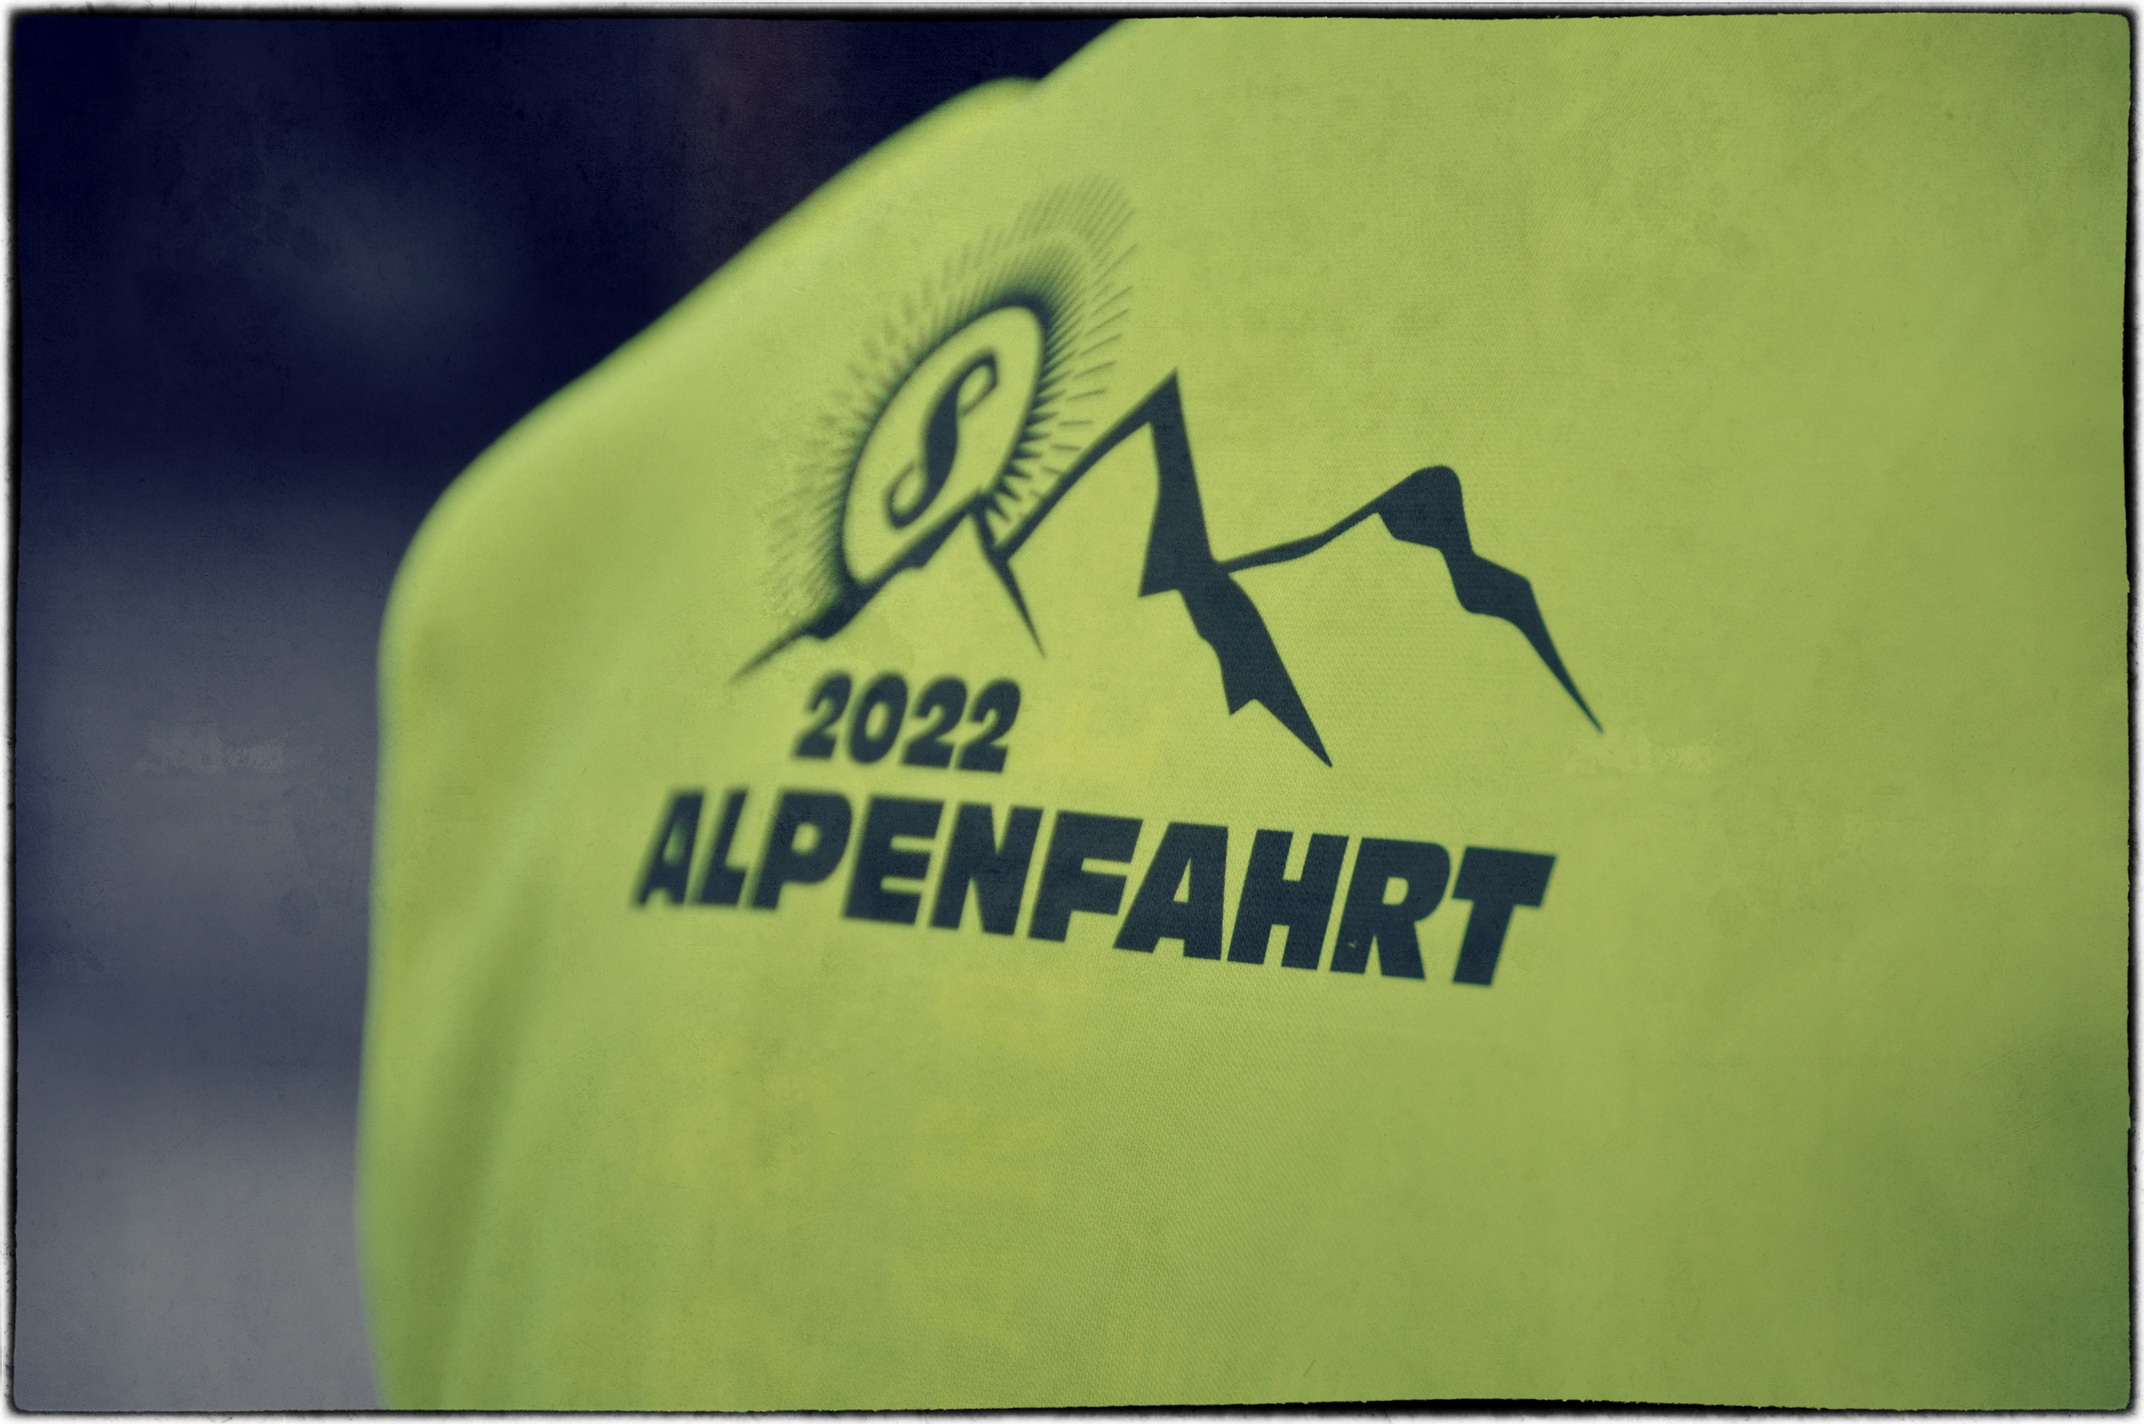 23.06.2022 – Trip across the alps 2022